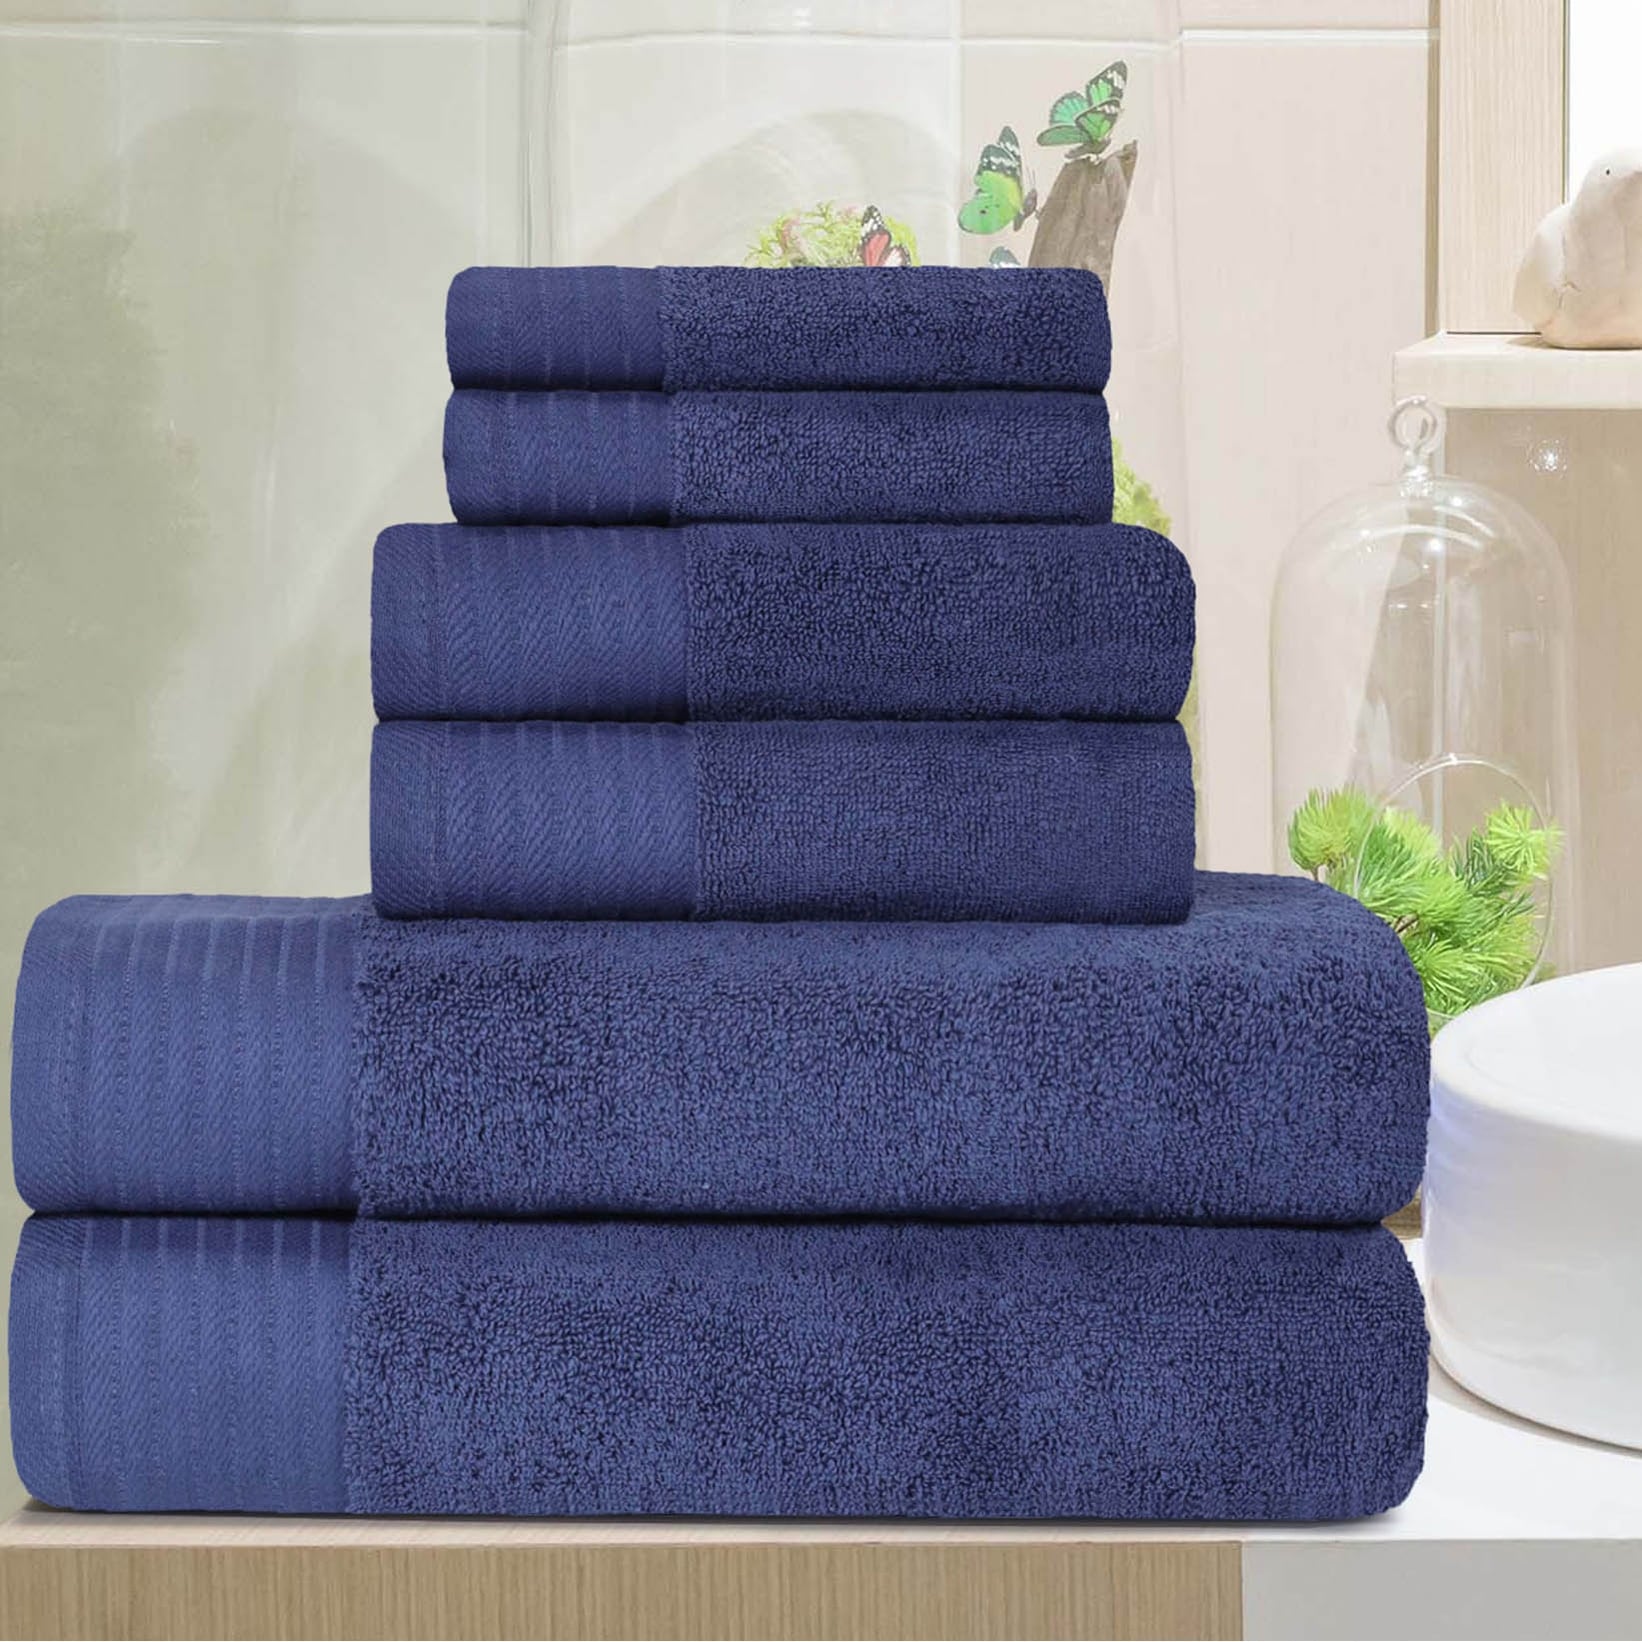 Home Sweet Home 6-Piece 650 GSM Cotton Bath Towel Set - Brown